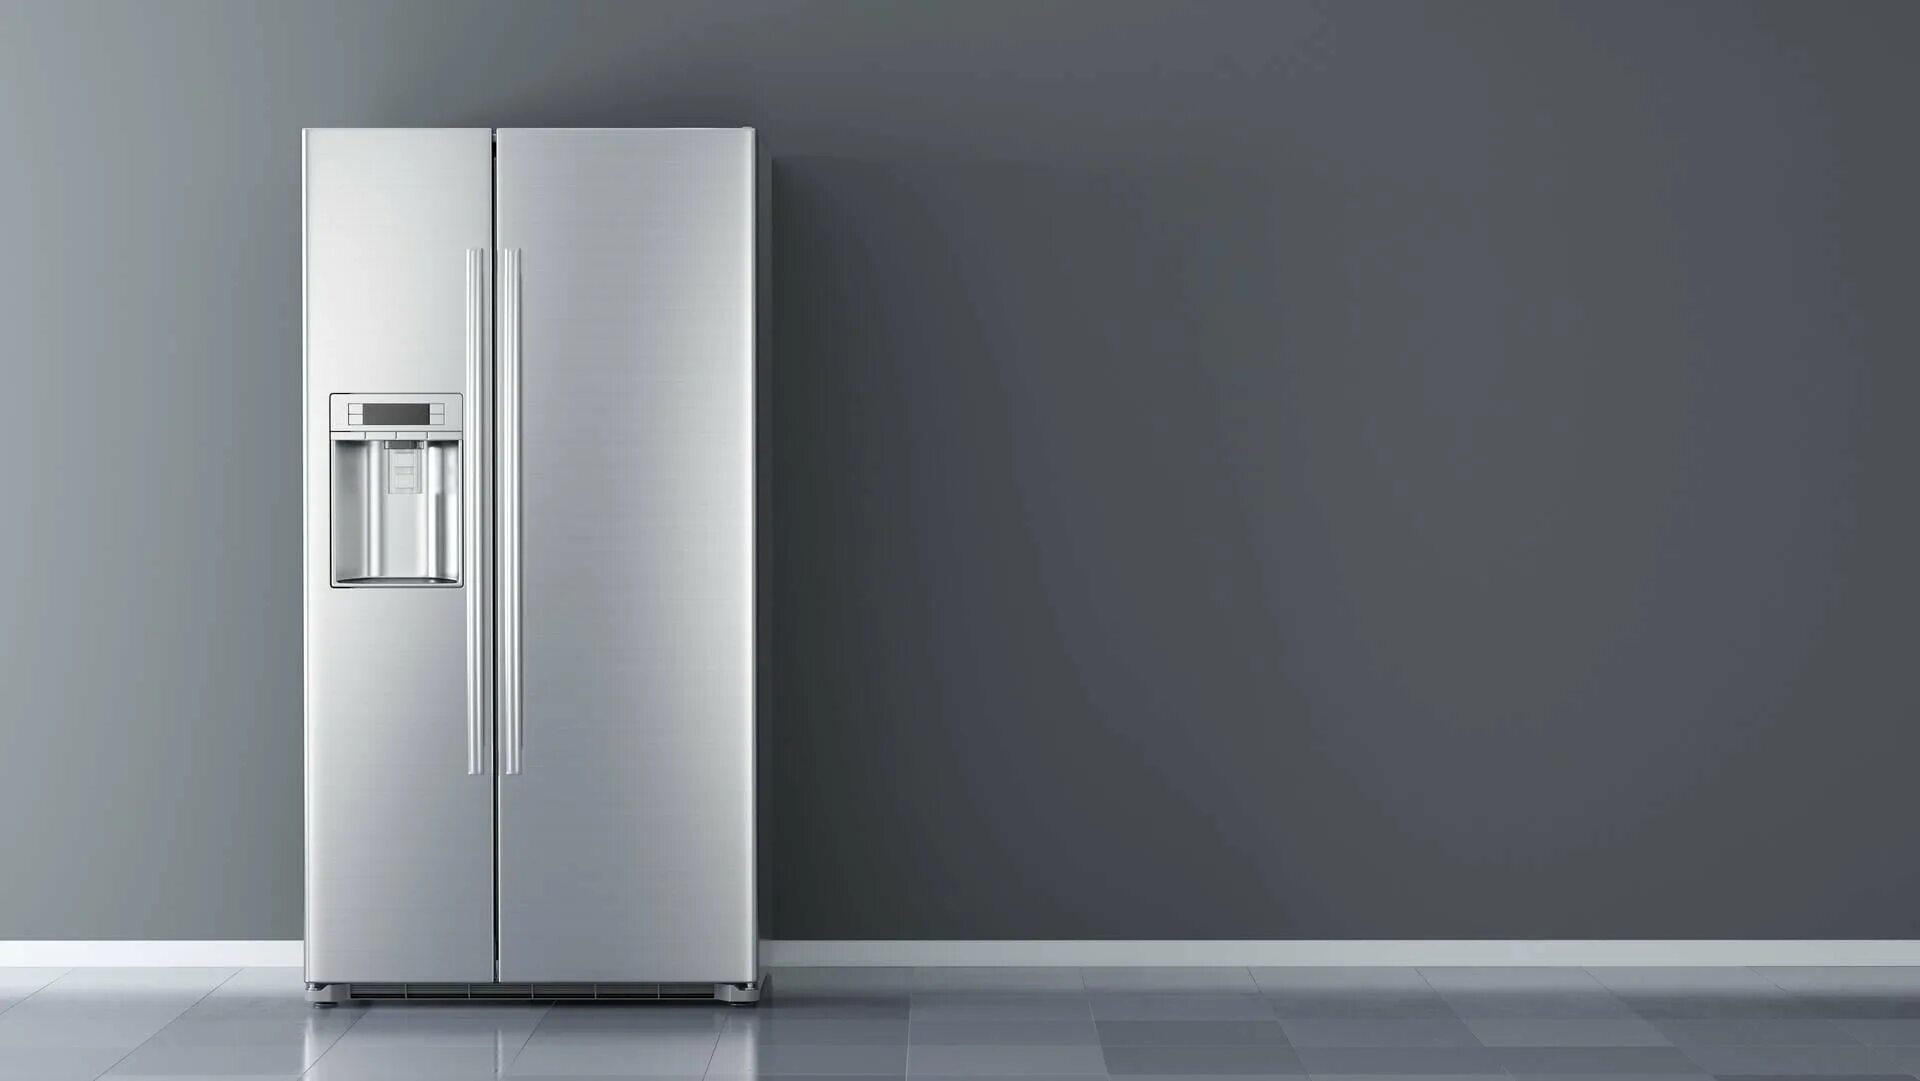 Холодильник (Side-by-Side) Smeg fq60cpo. Холодильник (Side-by-Side) Ascoli acdb520wib. Холодильник (Side-by-Side) Haier HRF-521dm6ru. Холодильник Smeg Side by Side. Сток холодильника